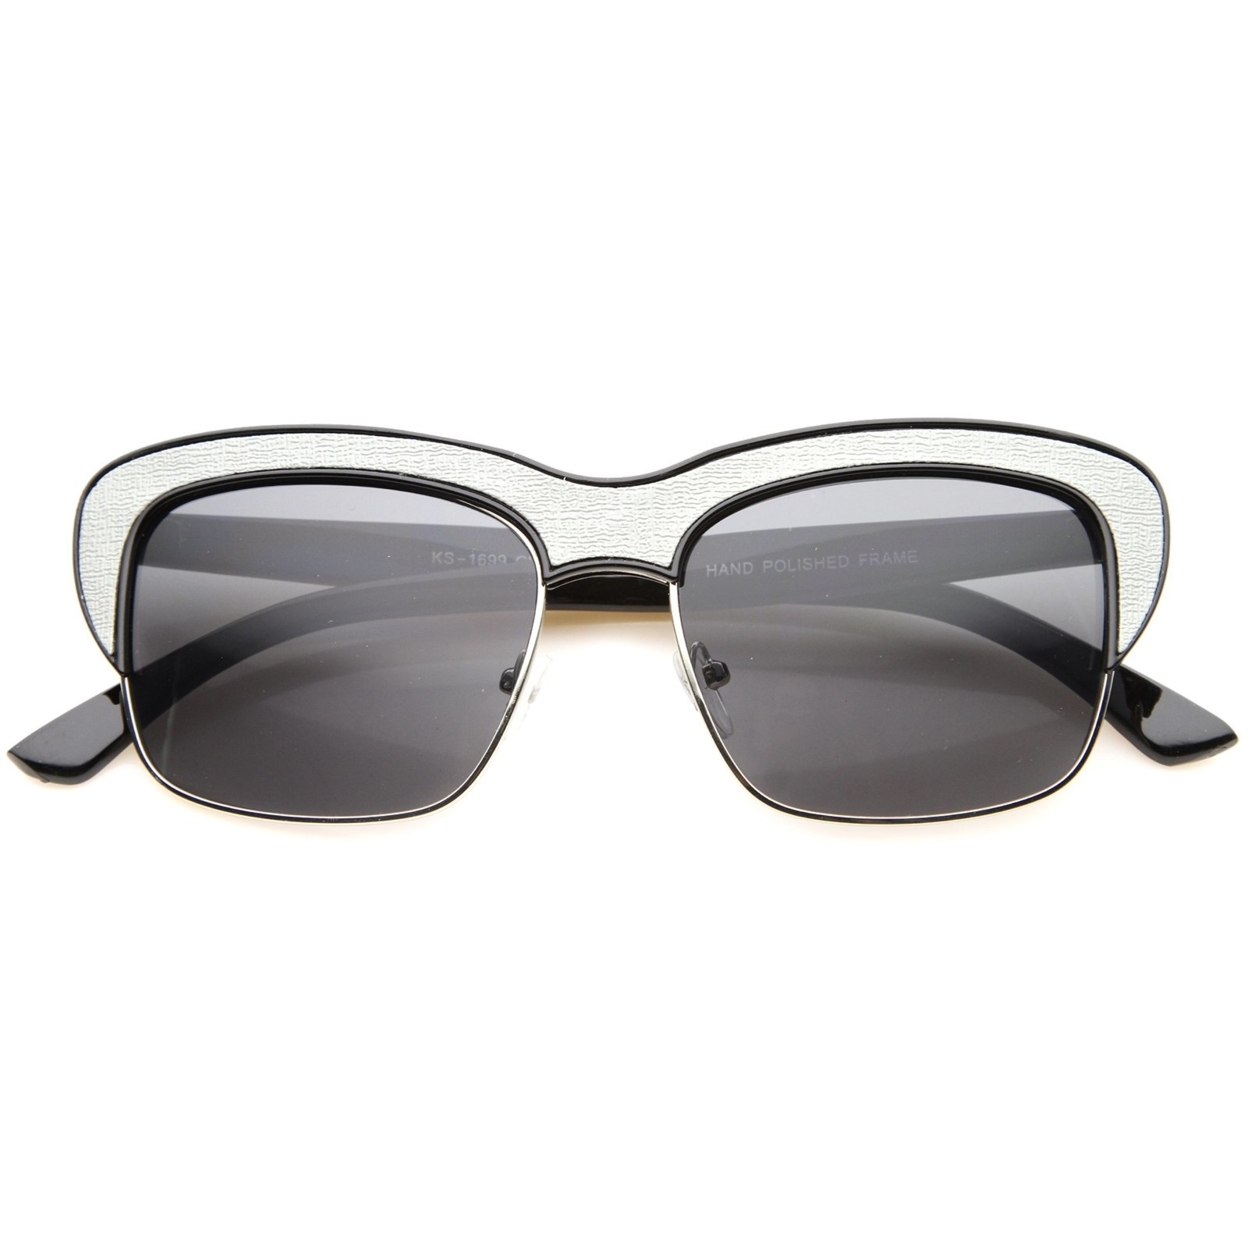 Womens Semi-Rimless Sunglasses With UV400 Protected Composite Lens - Black-Grey / Smoke